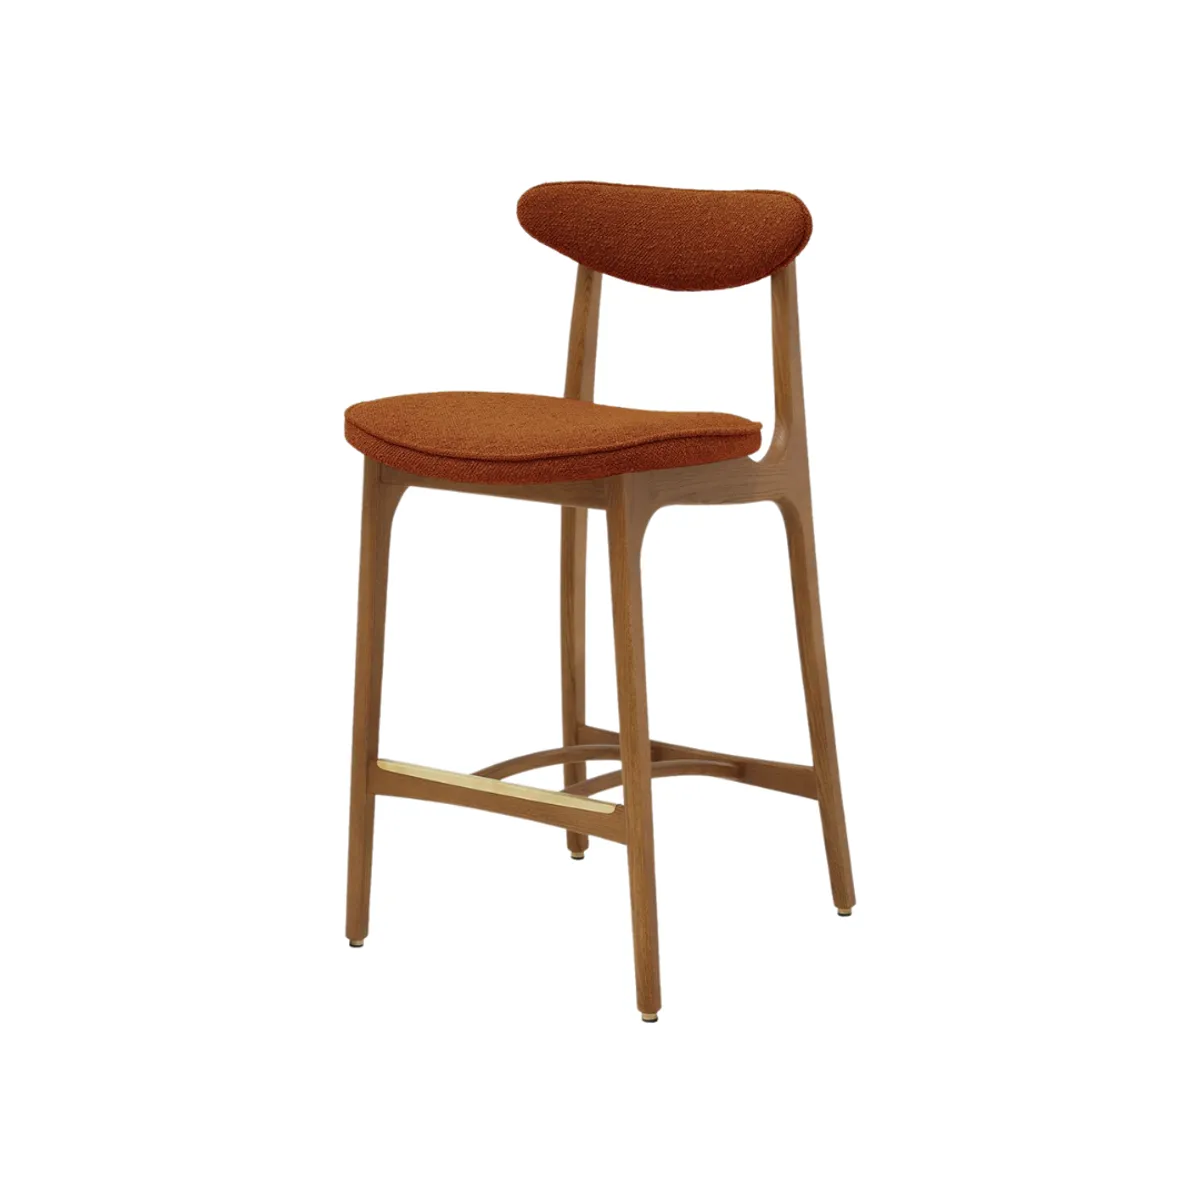 200-190 bar stool 4